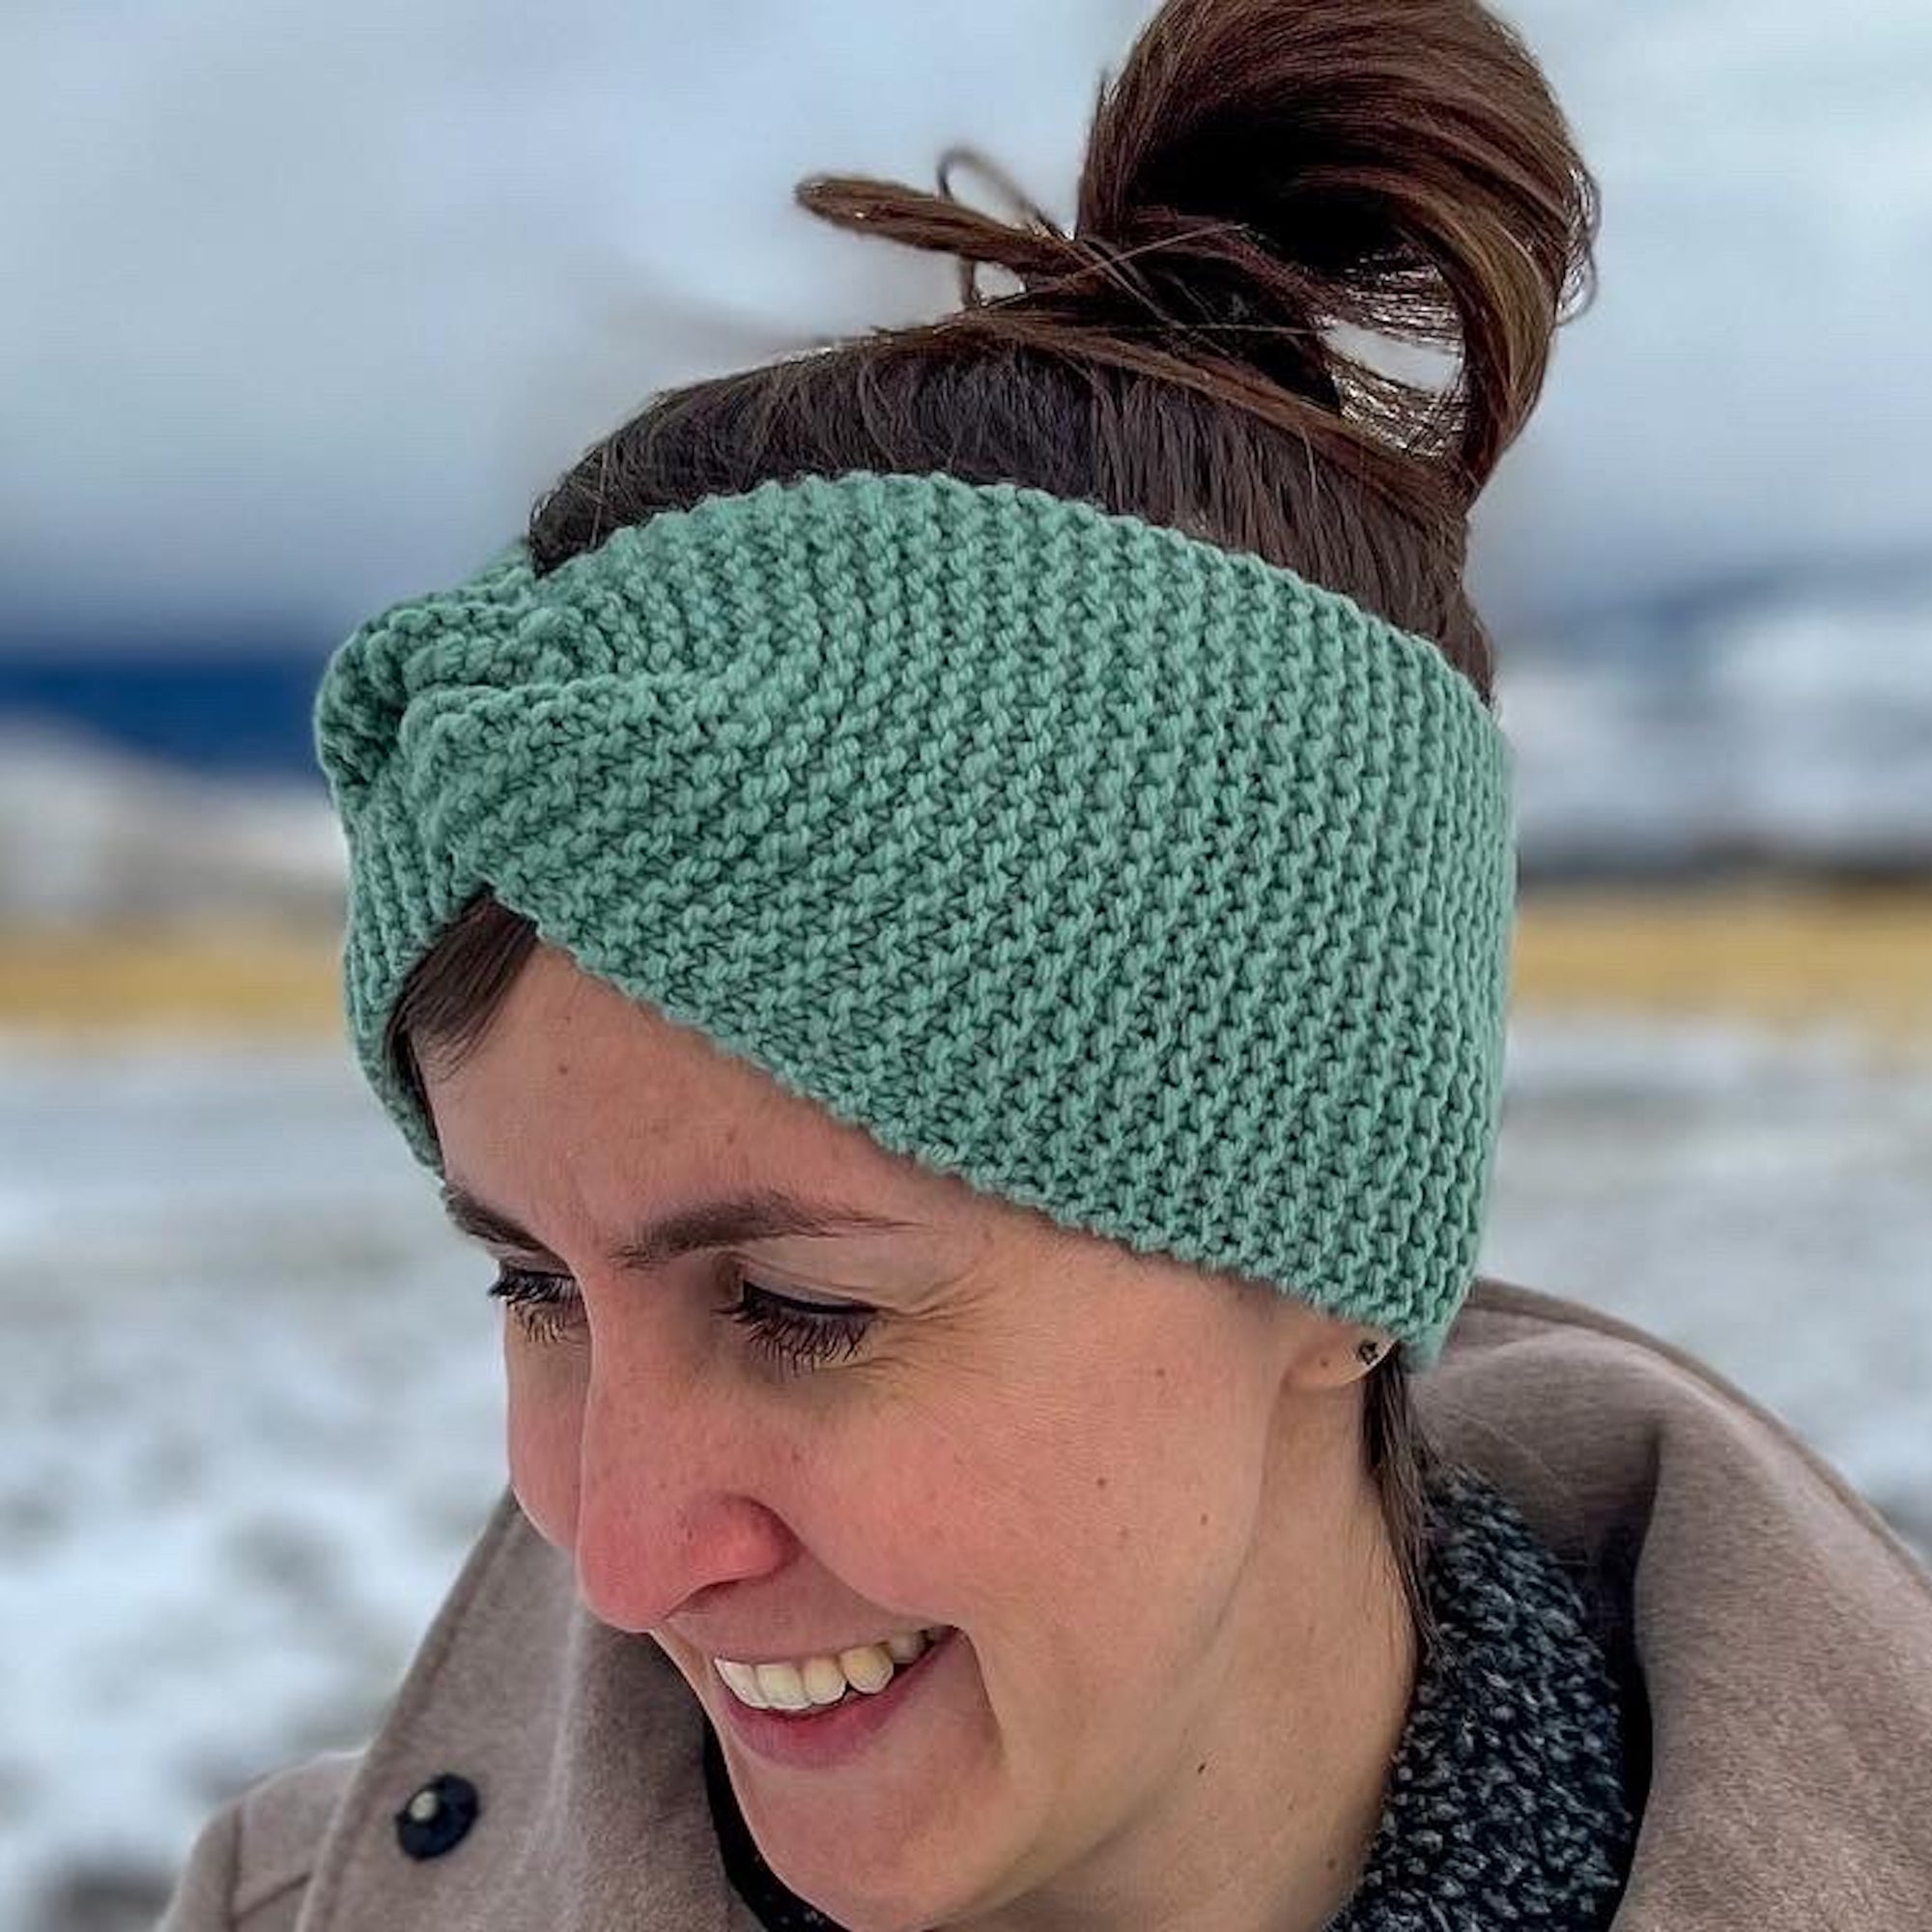 The Boho Messy Bun Headband - A Beginner Knitting Pattern